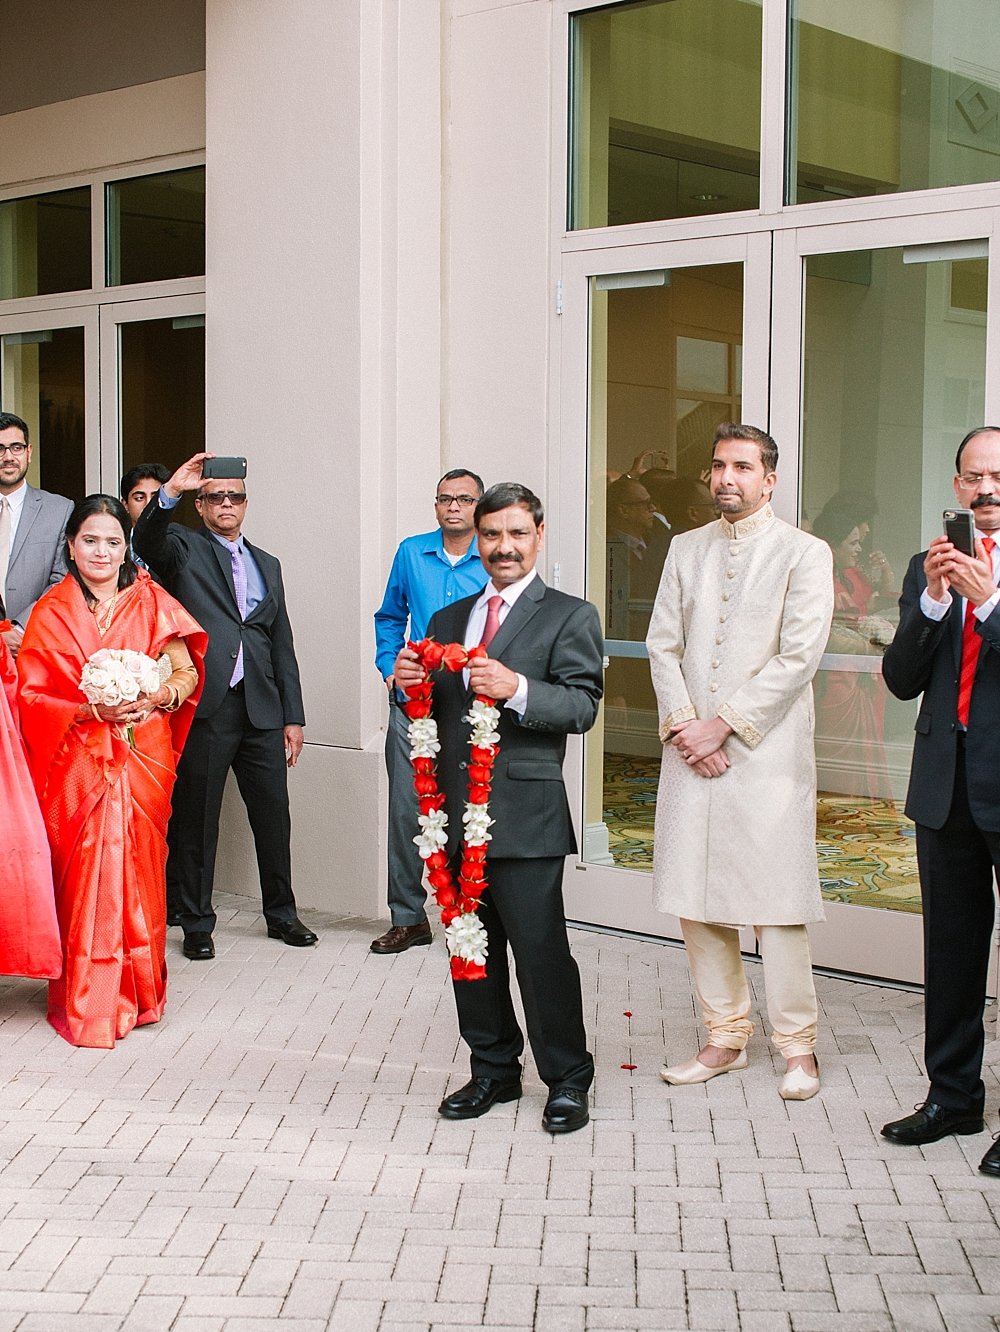 Indian Wedding Hilton Bonnet Creek Waldorf Astoria Orlando FL - Fuji 400h - Film Photography | Ashley Holstein Photography #indianwedding